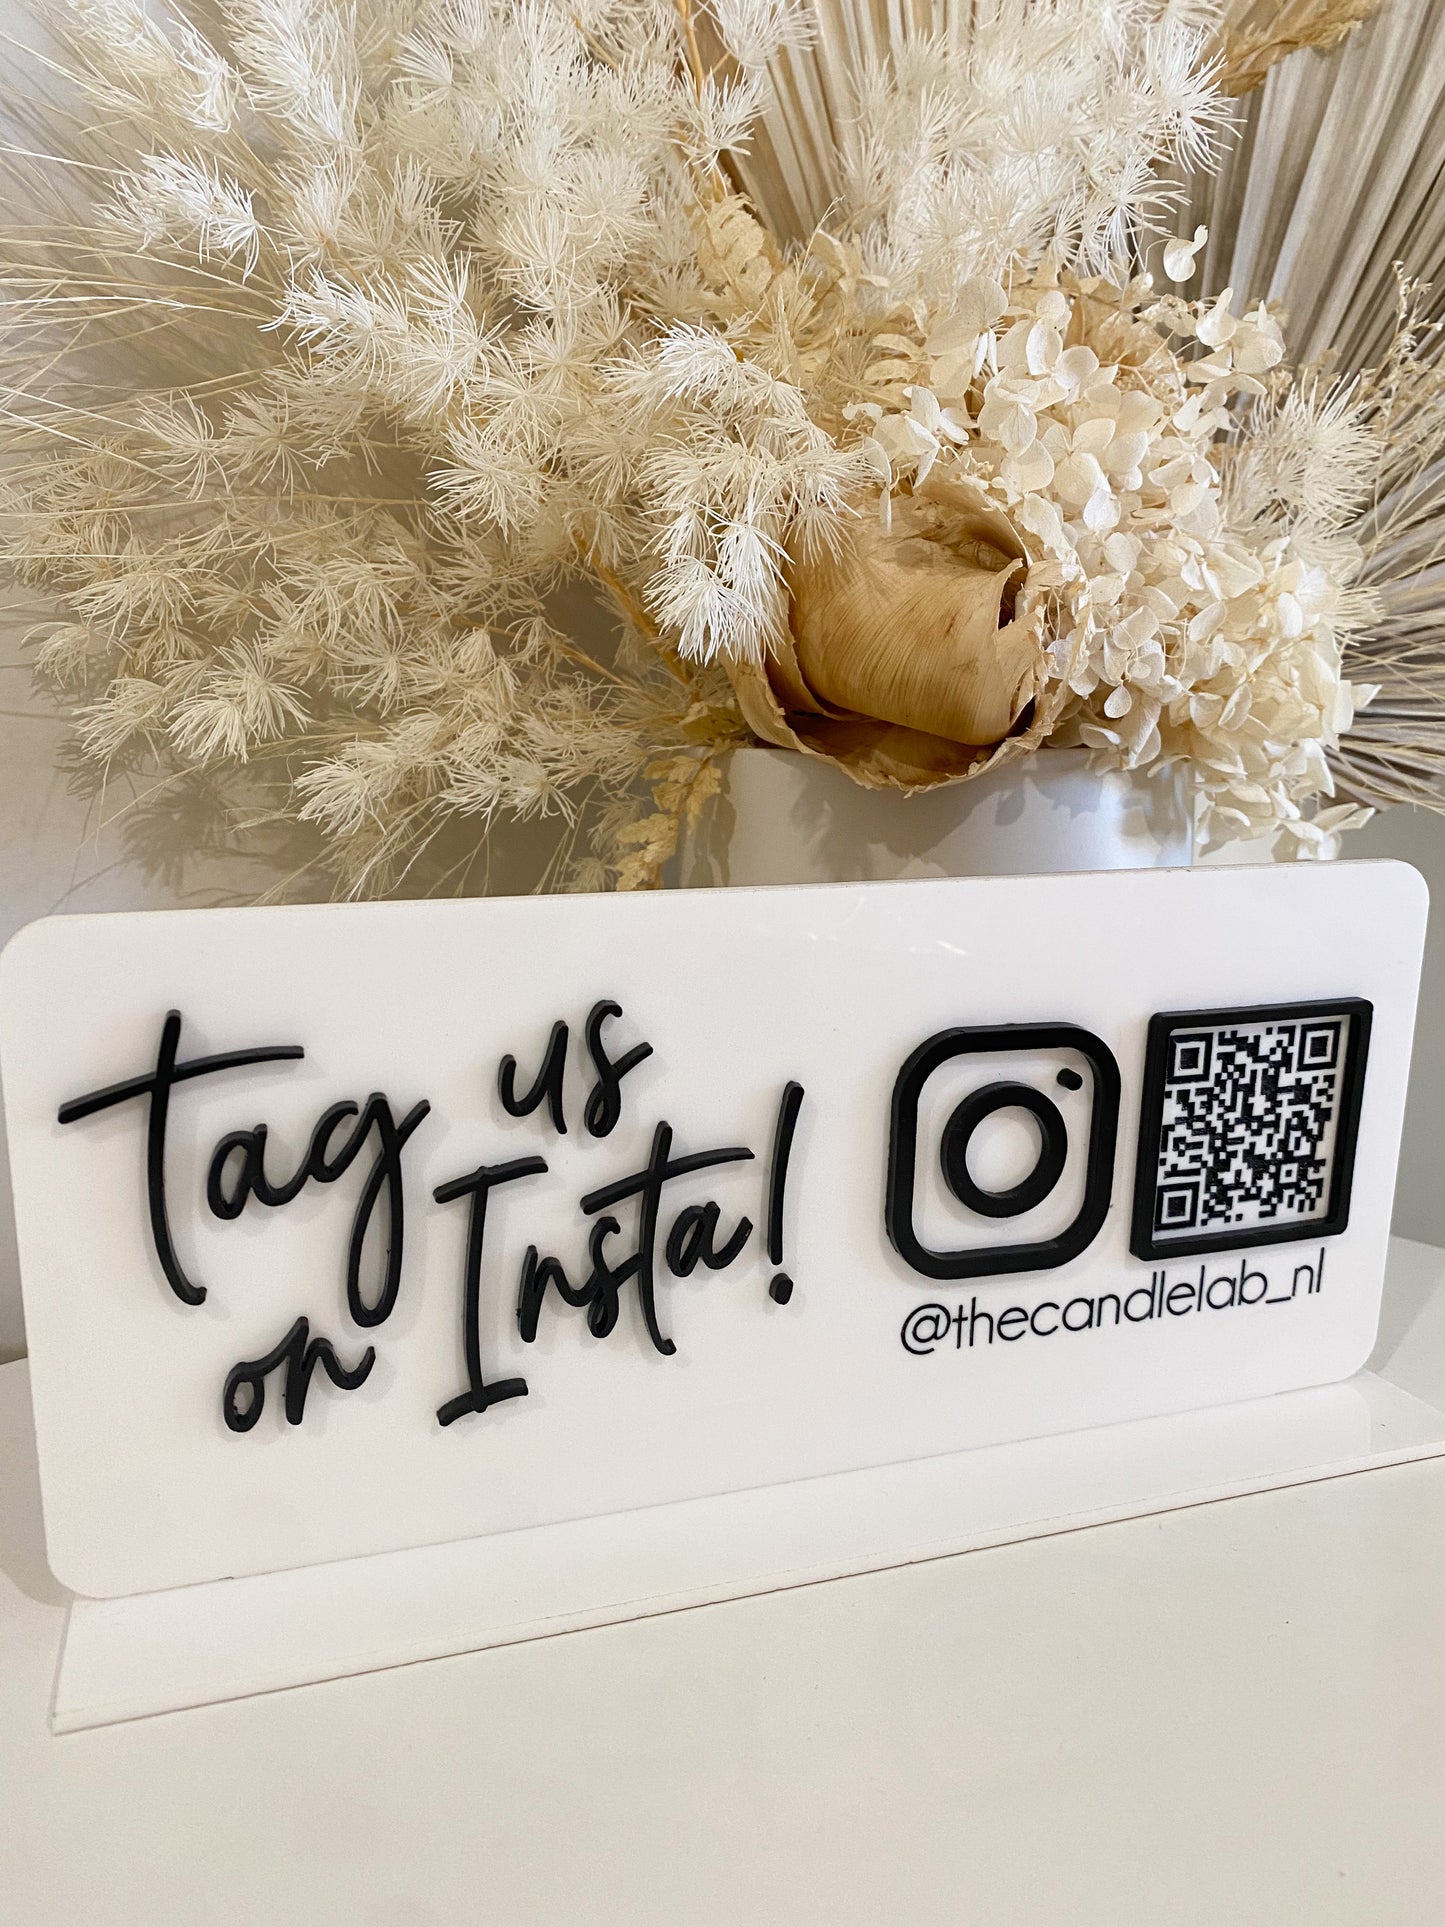 Acrylic Instagram Business QR Code Social Media Signage